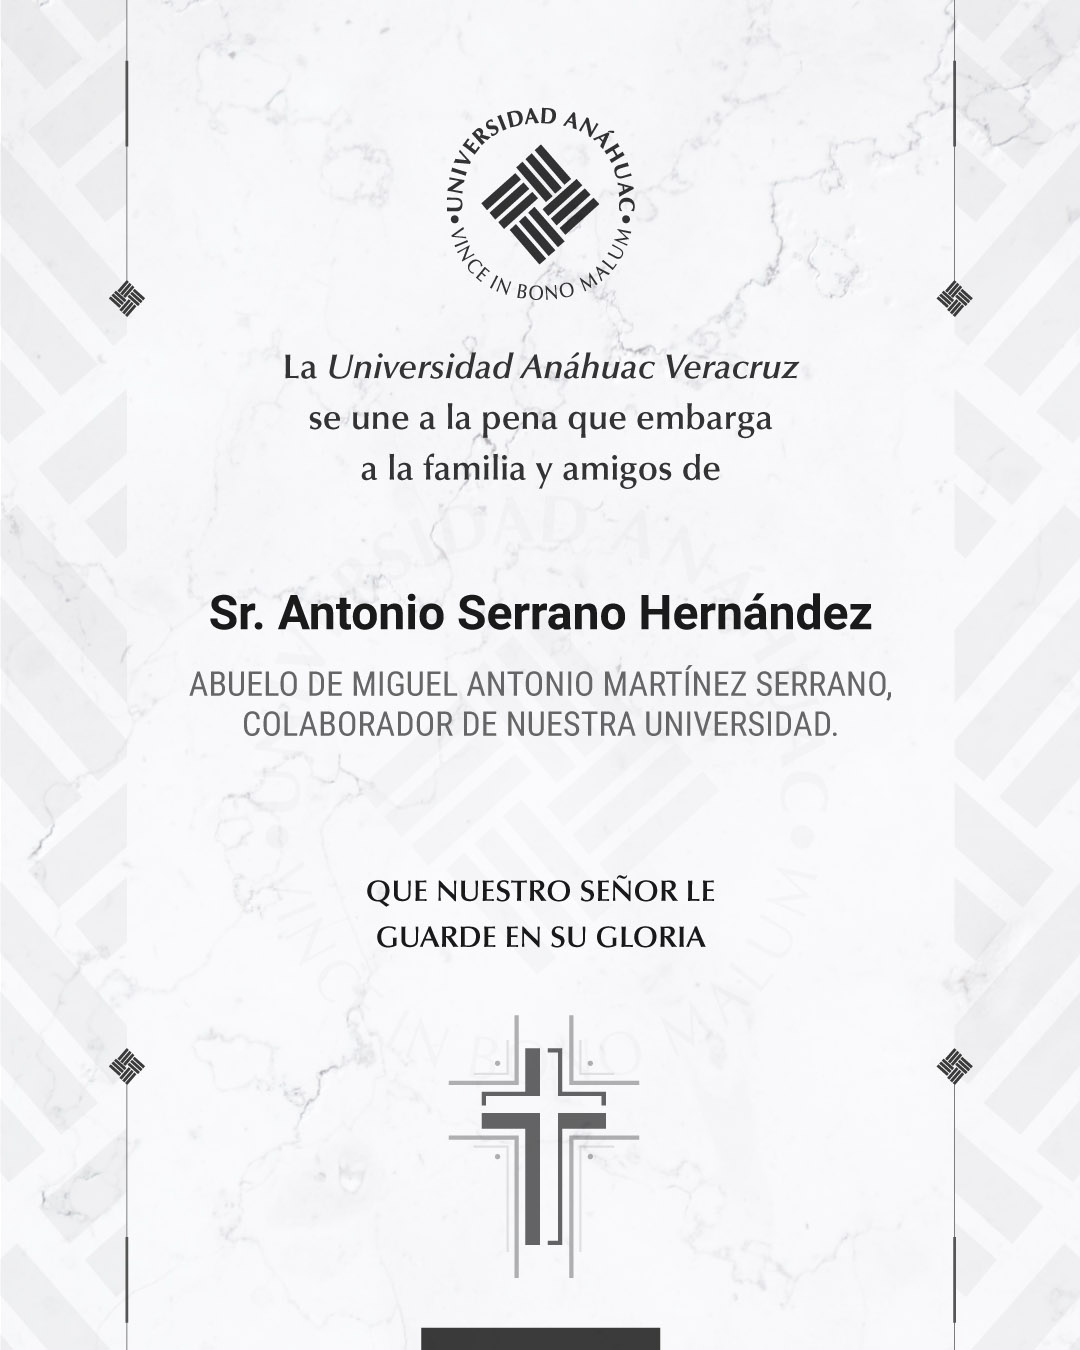 9 / 17 - Sr. Antonio Serrano Hernández